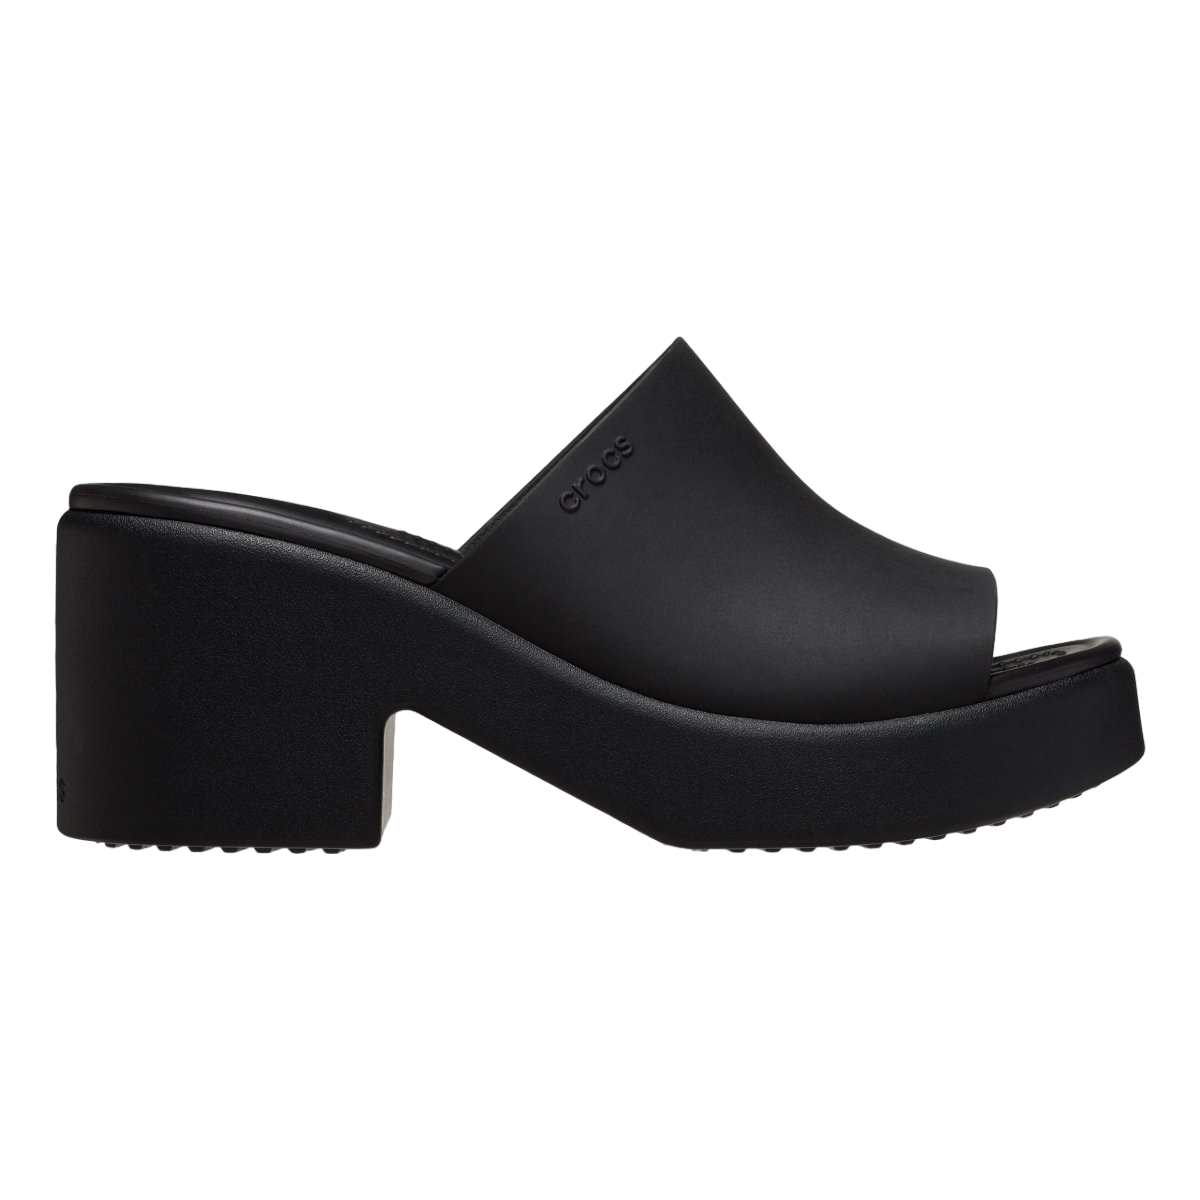 Crocs sandalo da donna con tacco Brooklyn Slide Heel 209408-060 nero